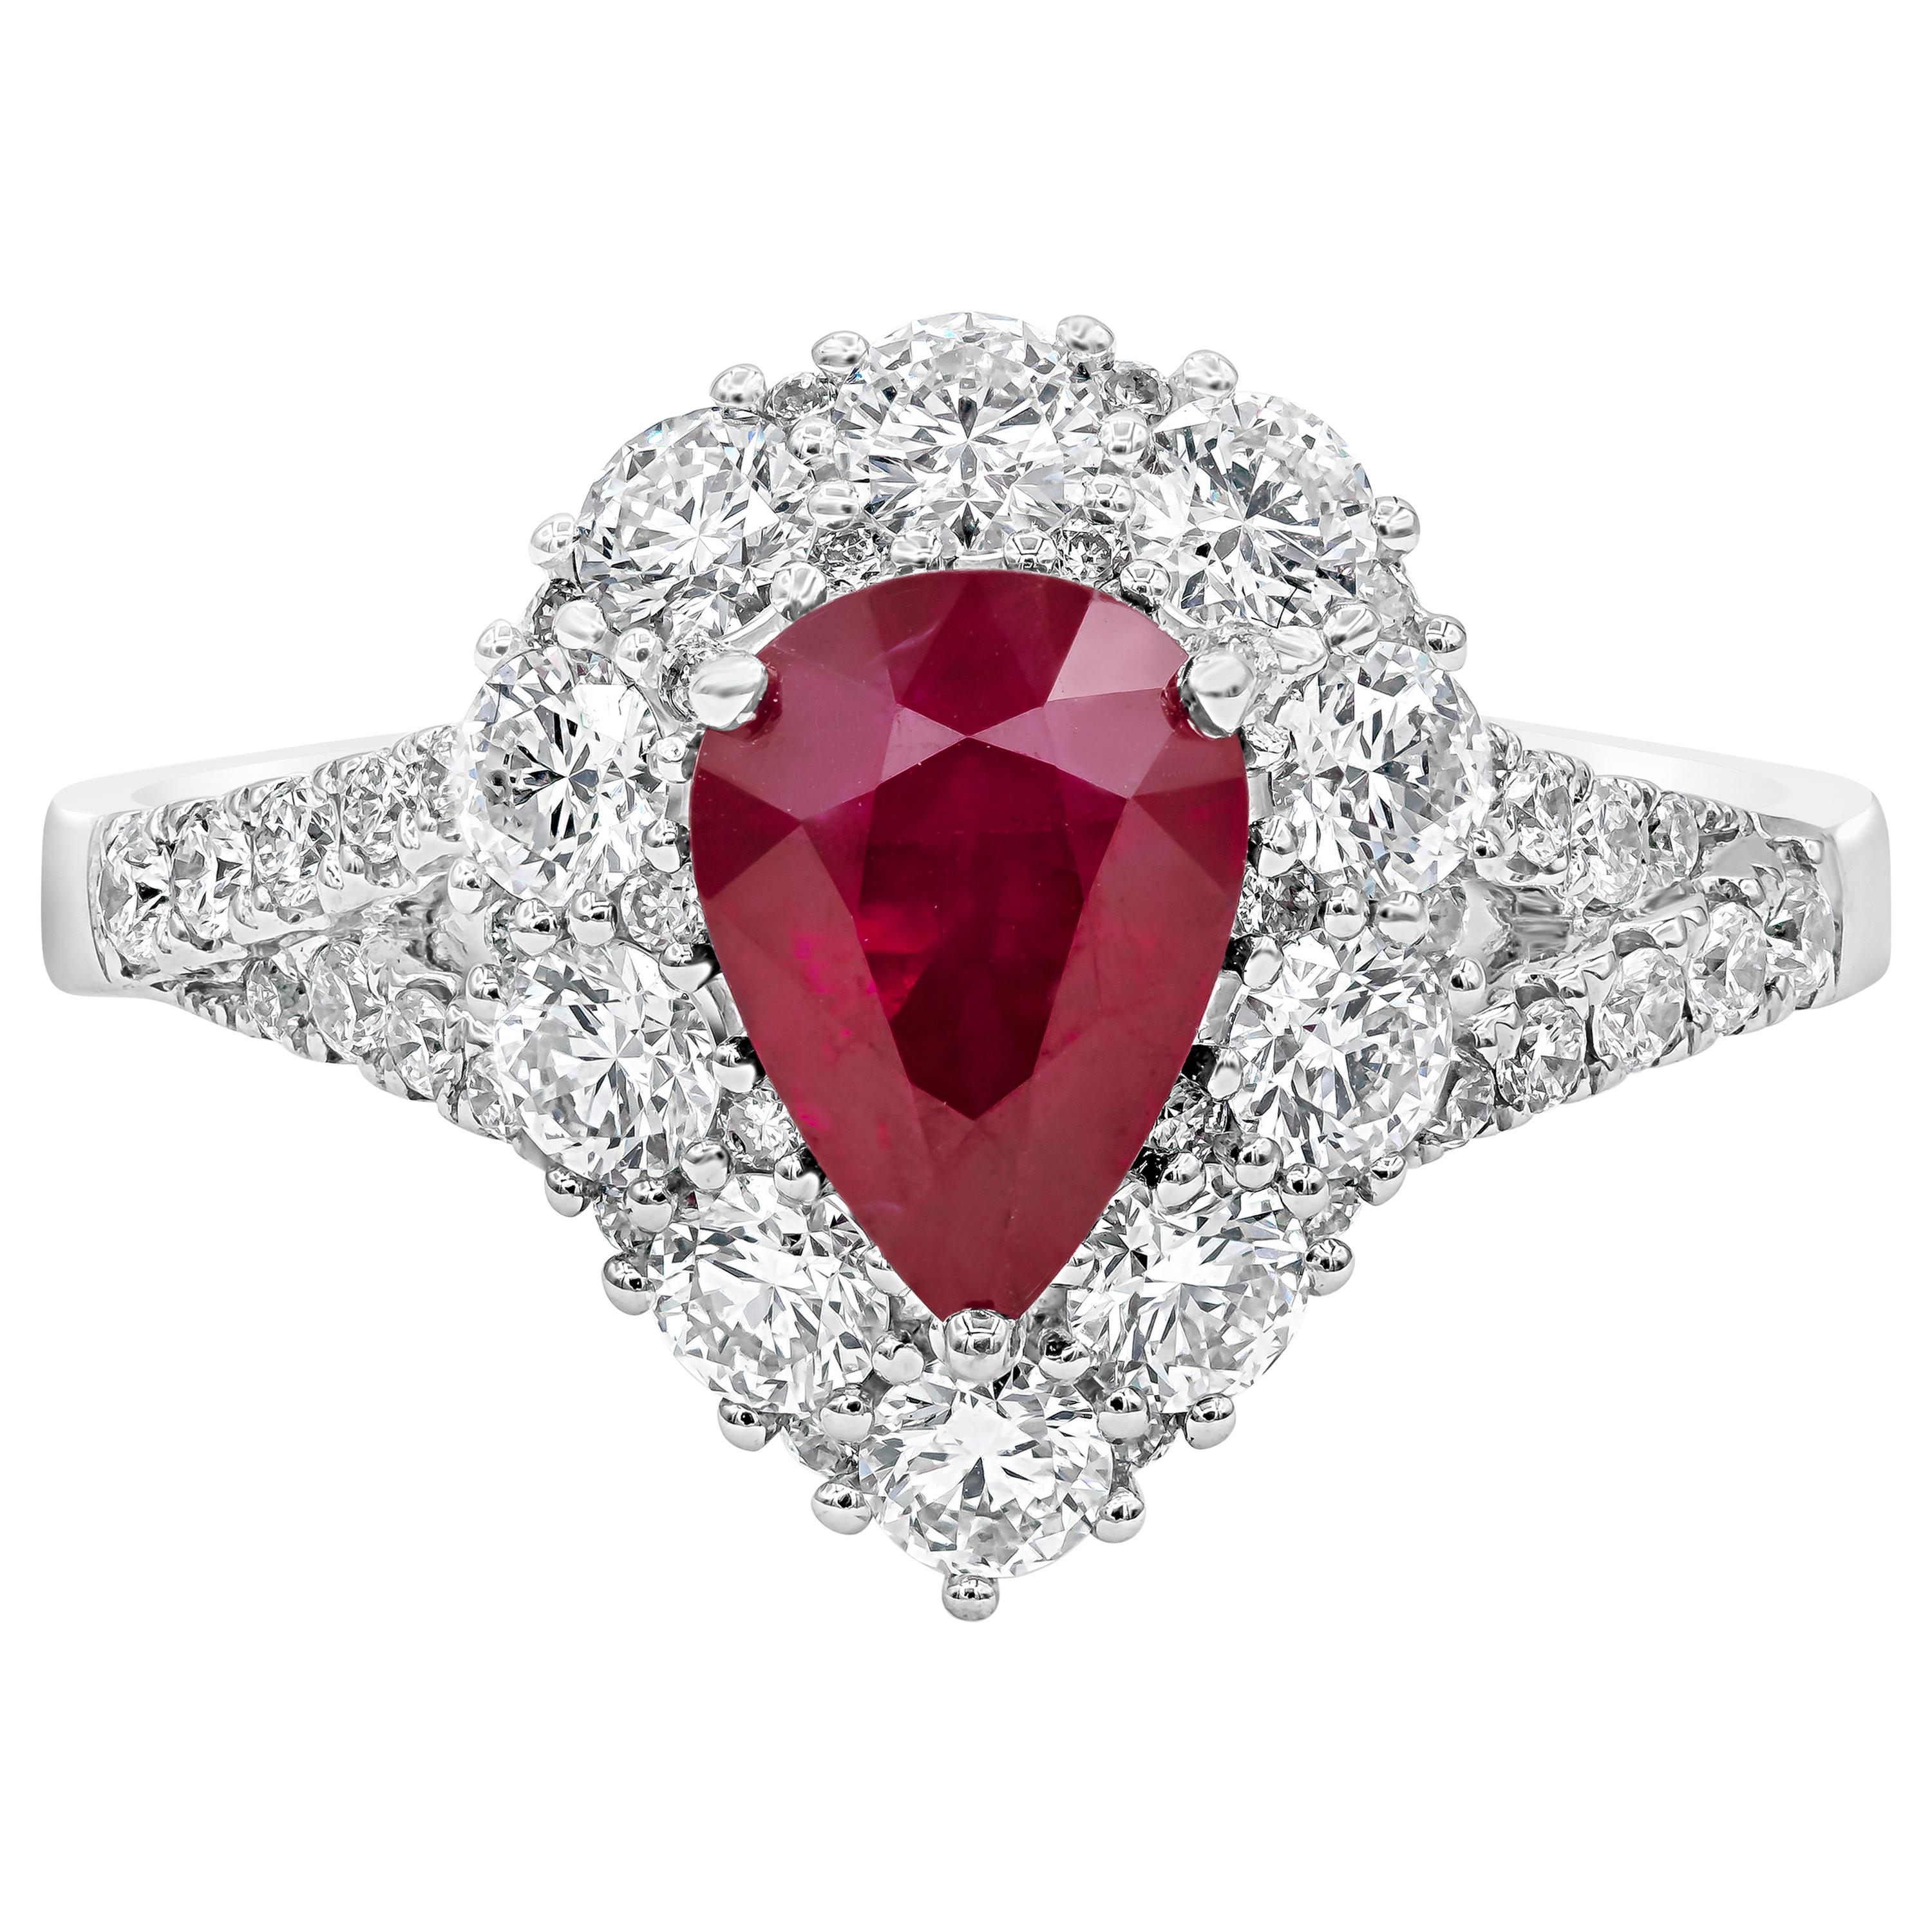 Roman Malakov 1.33 Carats Pear Shape Ruby with Diamond Halo Engagement Ring